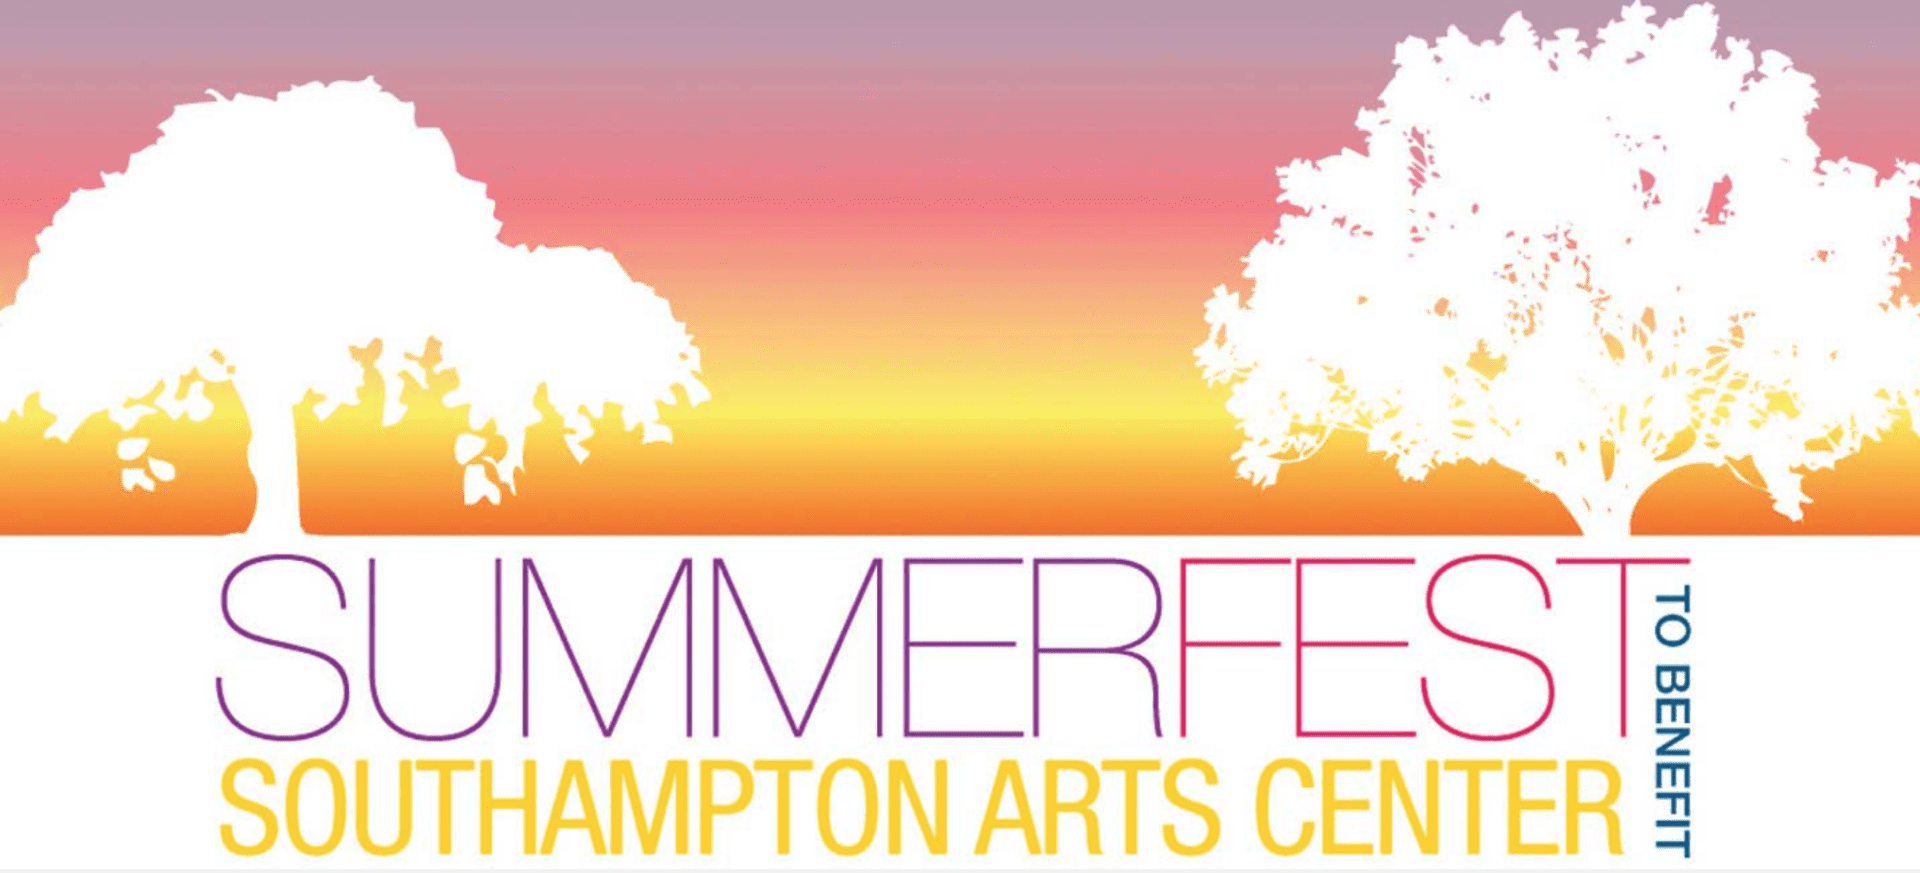 Culinary Arts Festival Benefit Event Southampton Arts Center